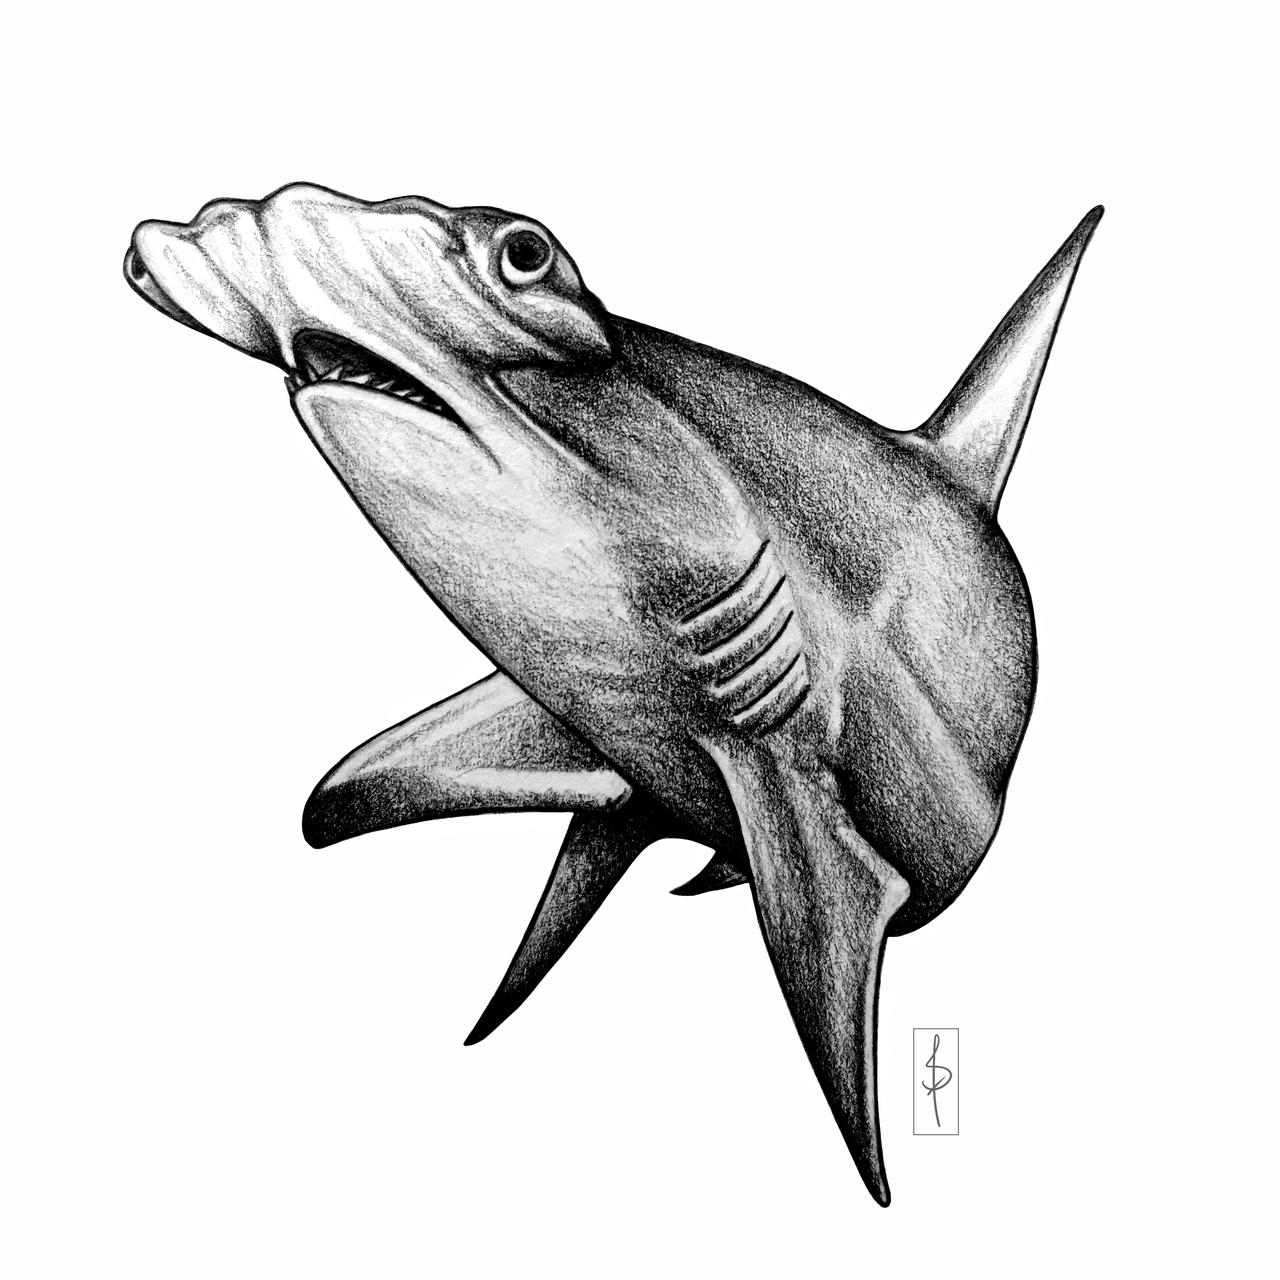 Hammerhead shark by Sifwen on DeviantArt